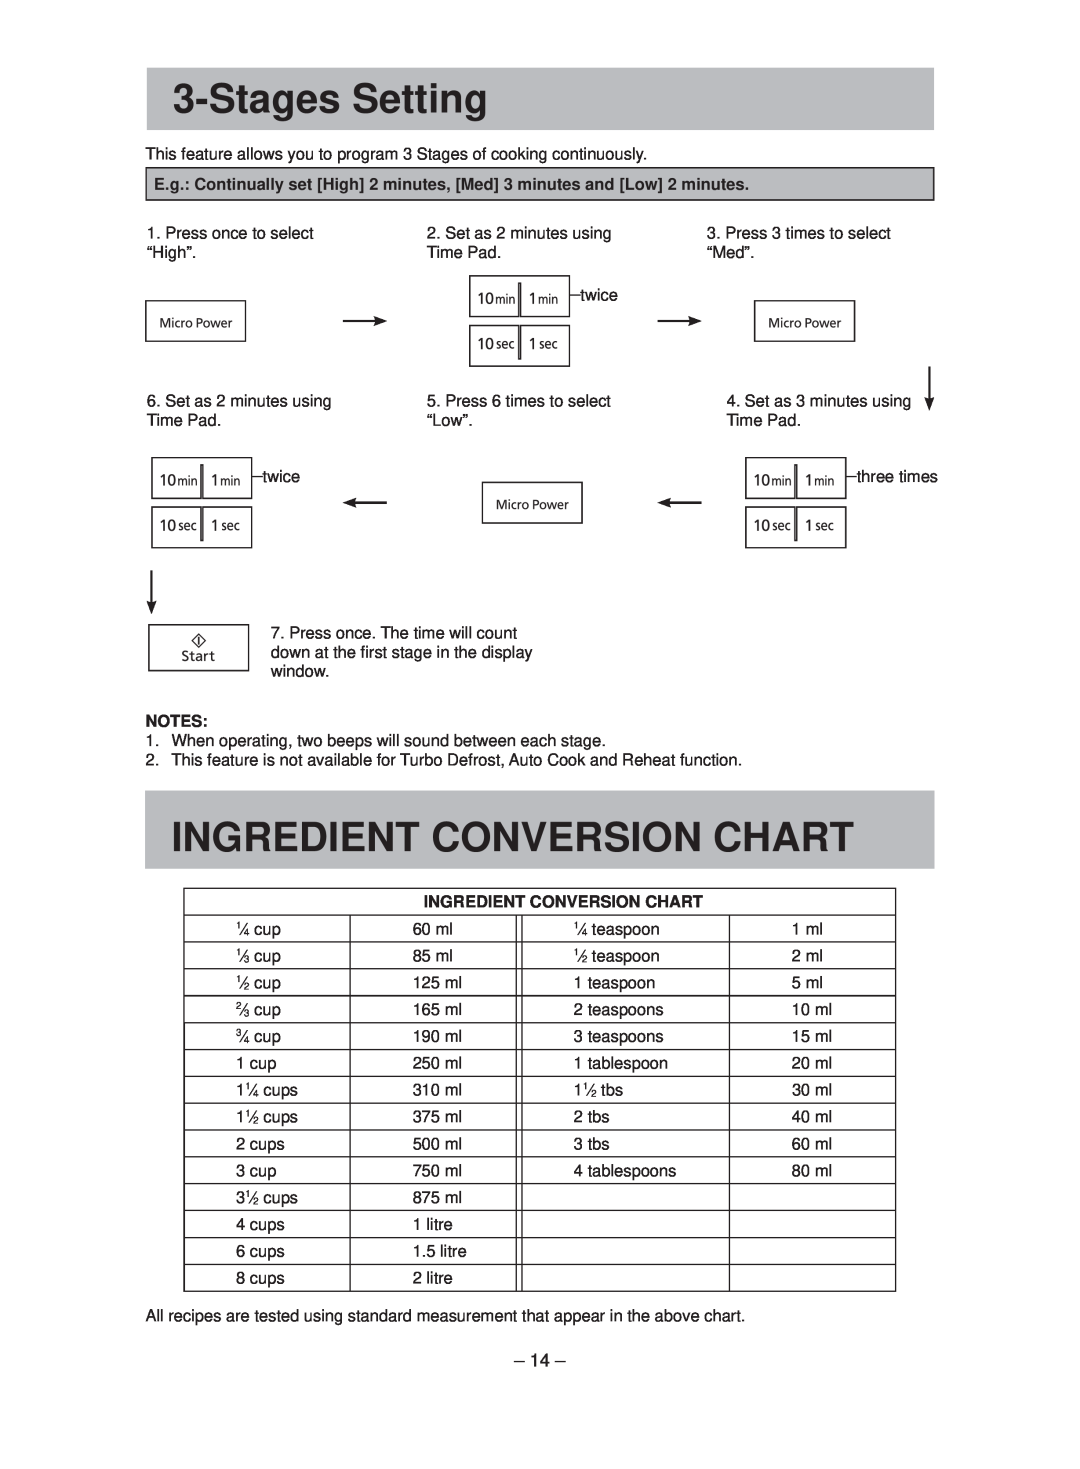 Panasonic NN-ST641W manual StagesSetting, Ingredient Conversion Chart 